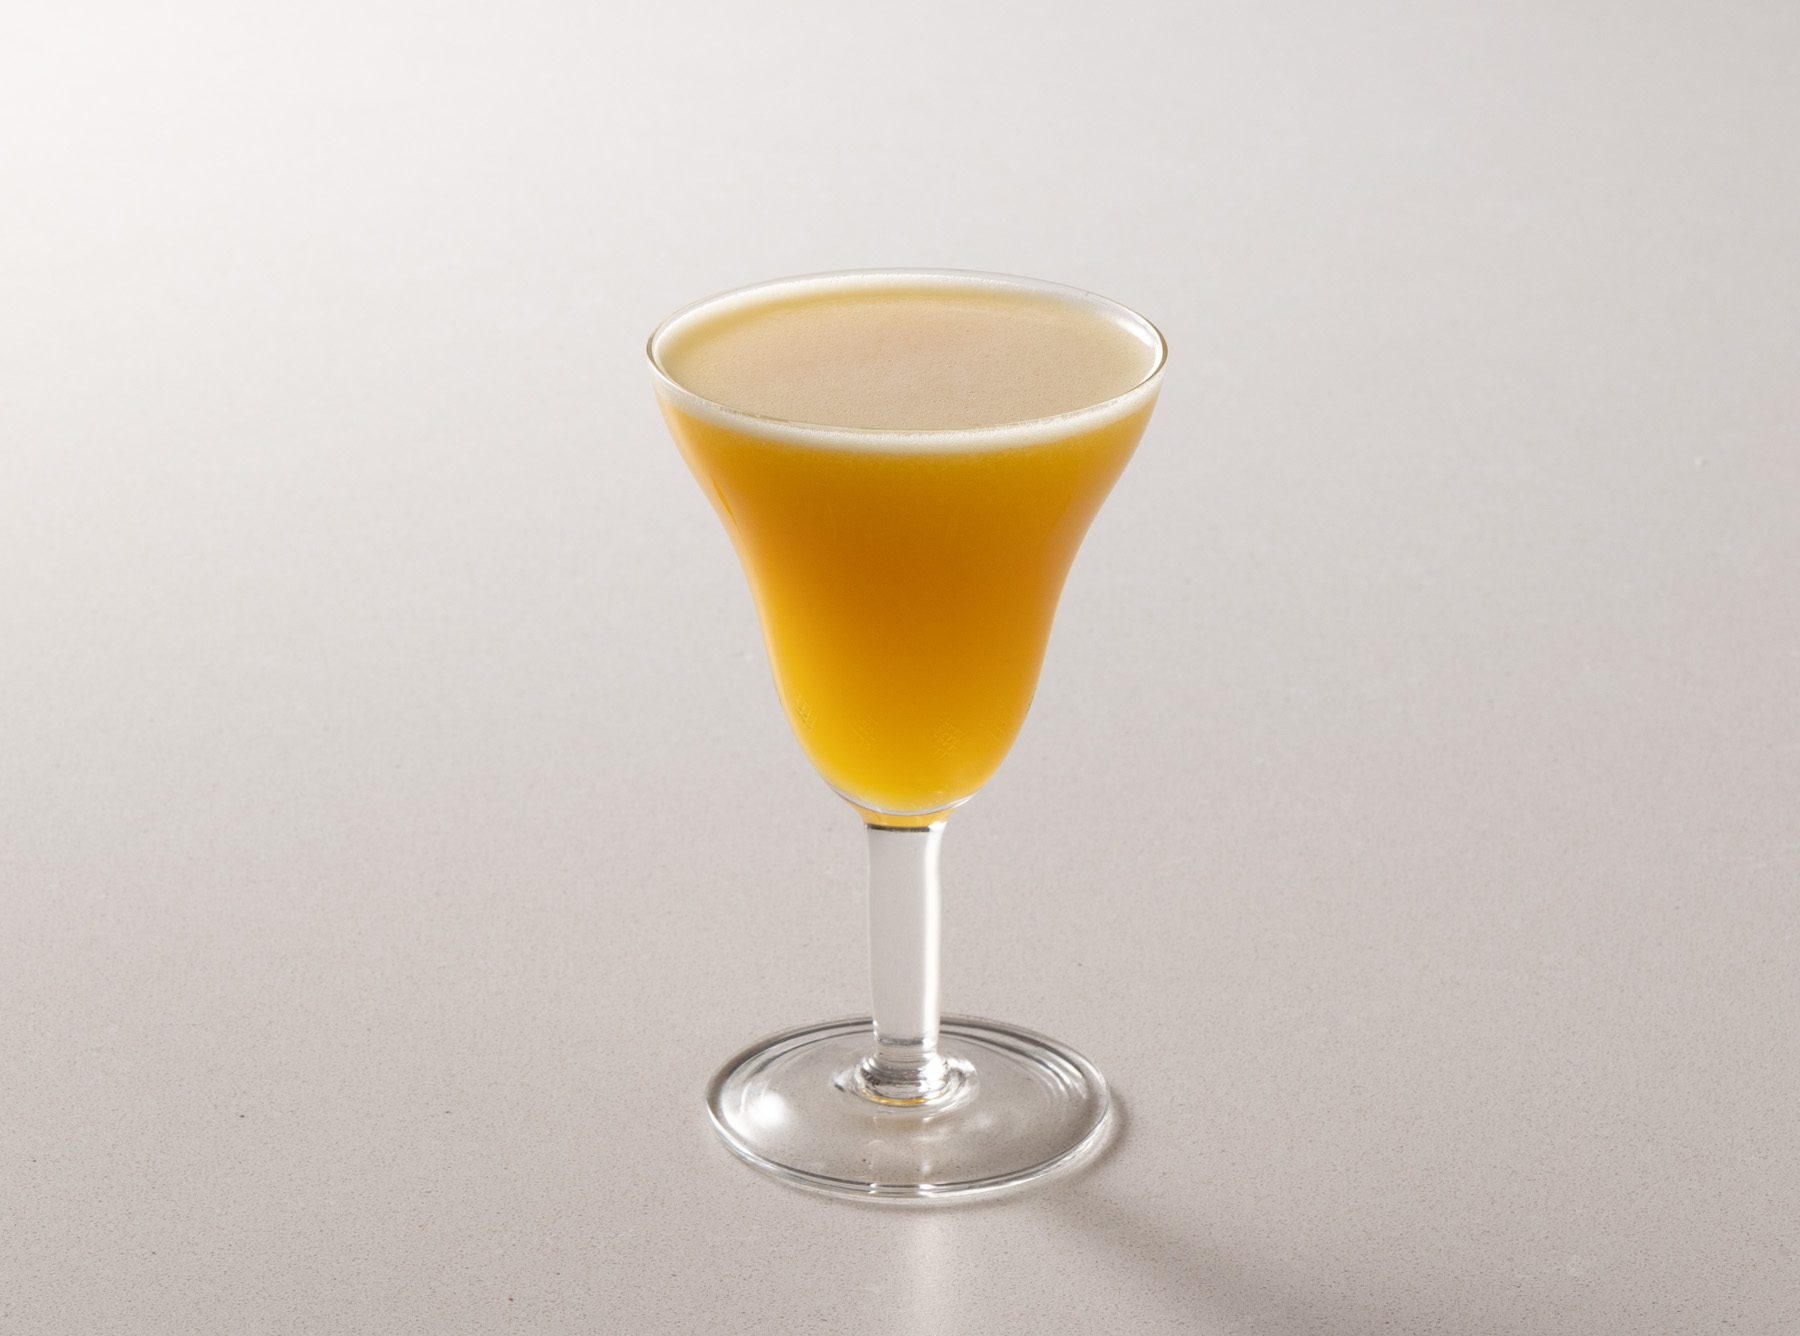 Don's Special Daiquiri cocktail